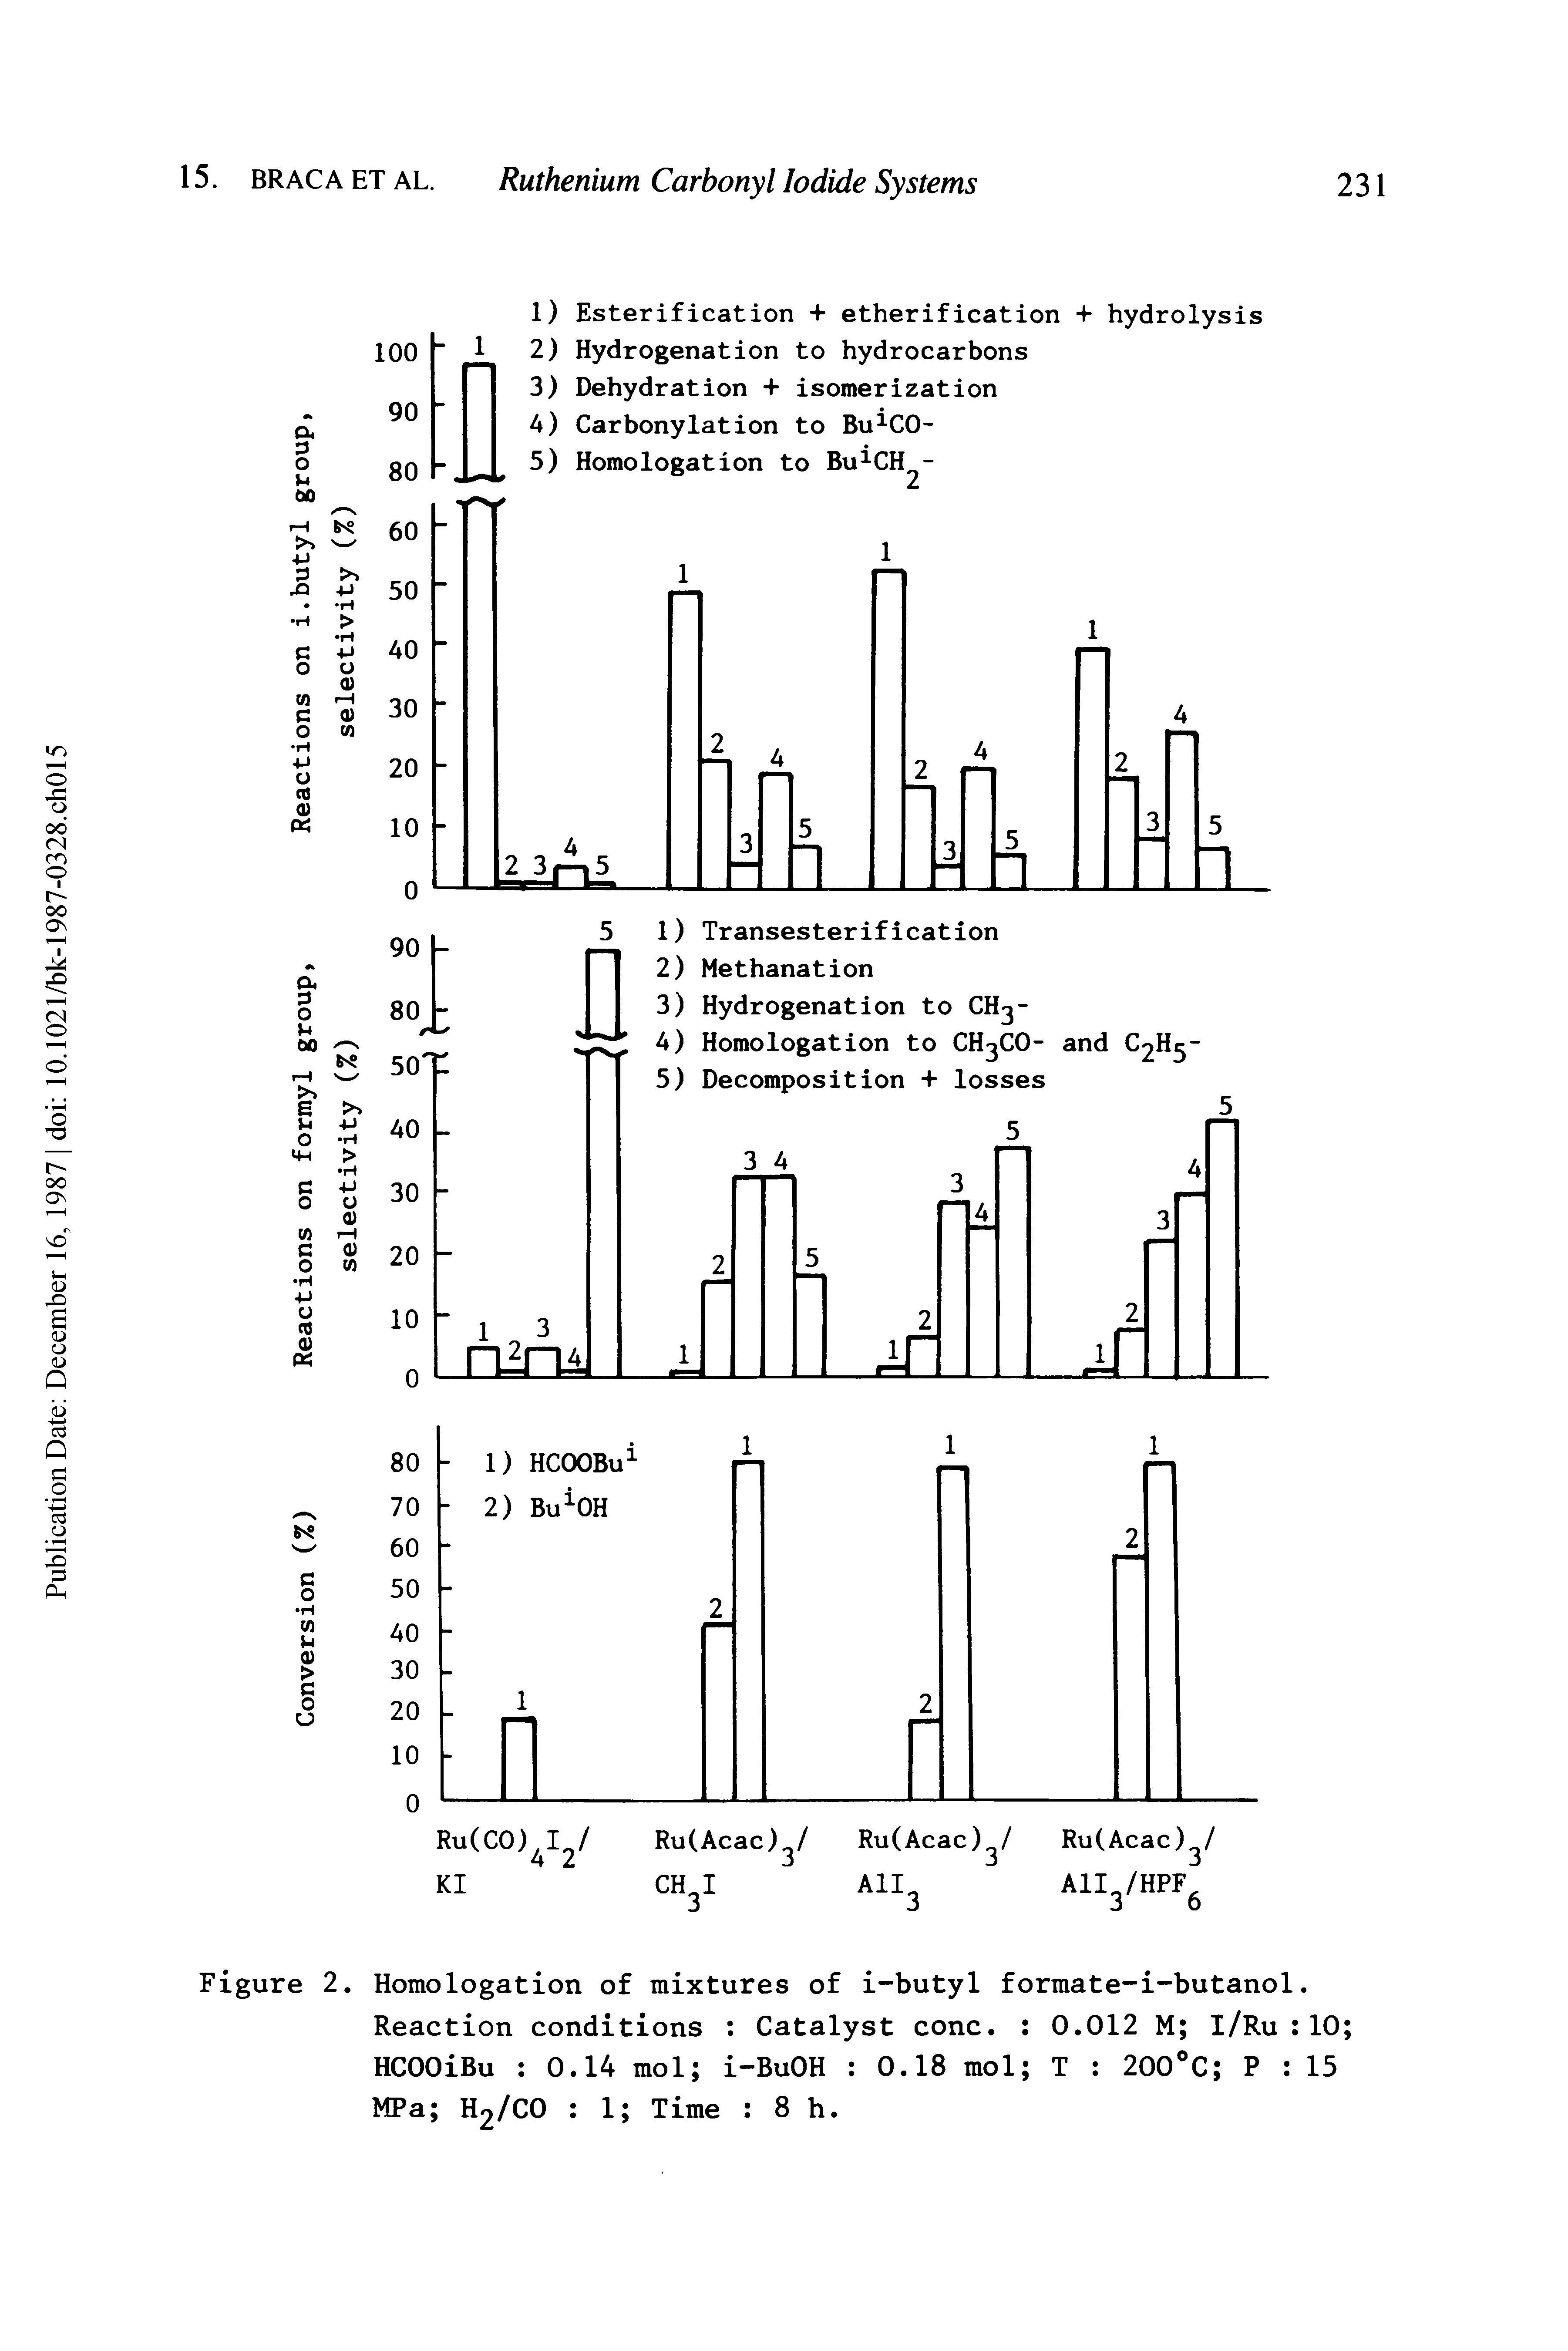 Figure 2. Homologation of mixtures of i-butyl formate-i-butanol.